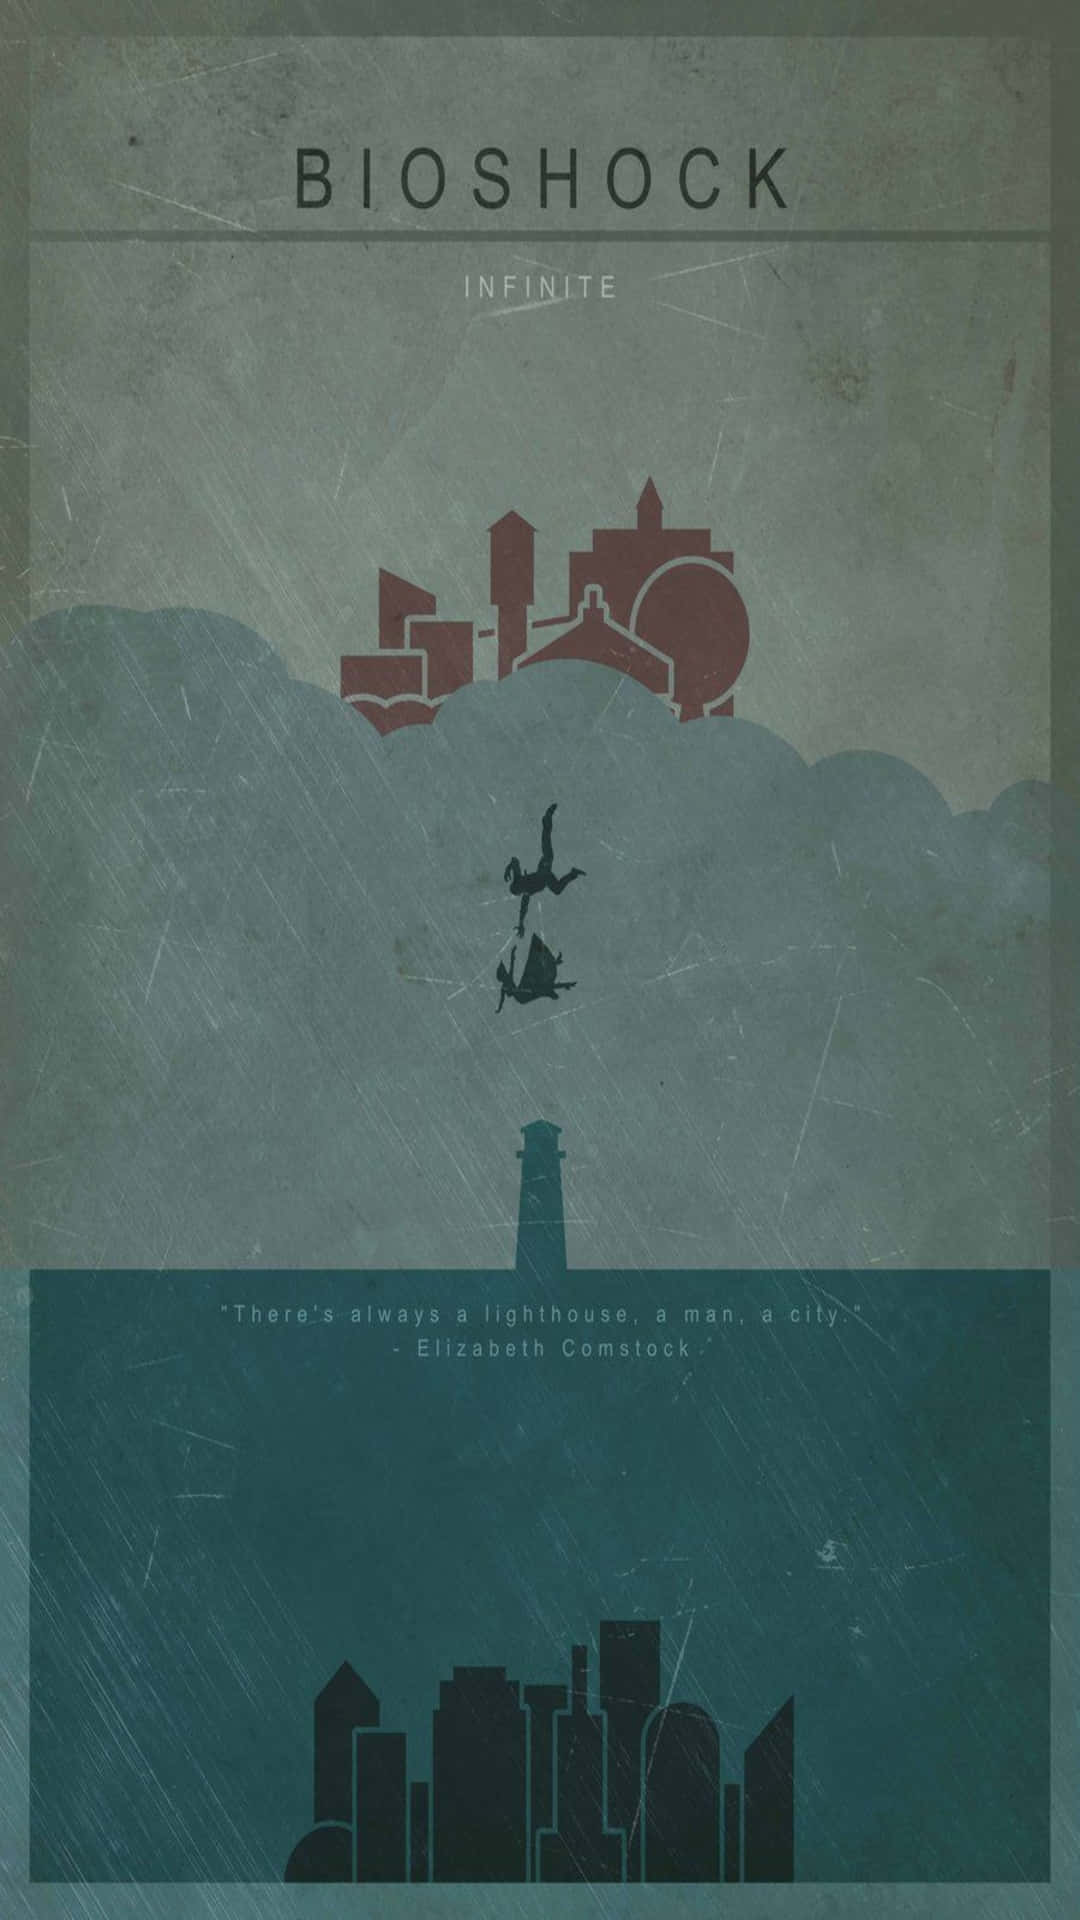 Android Bioshock Infinite Background Minimalist Poster Design